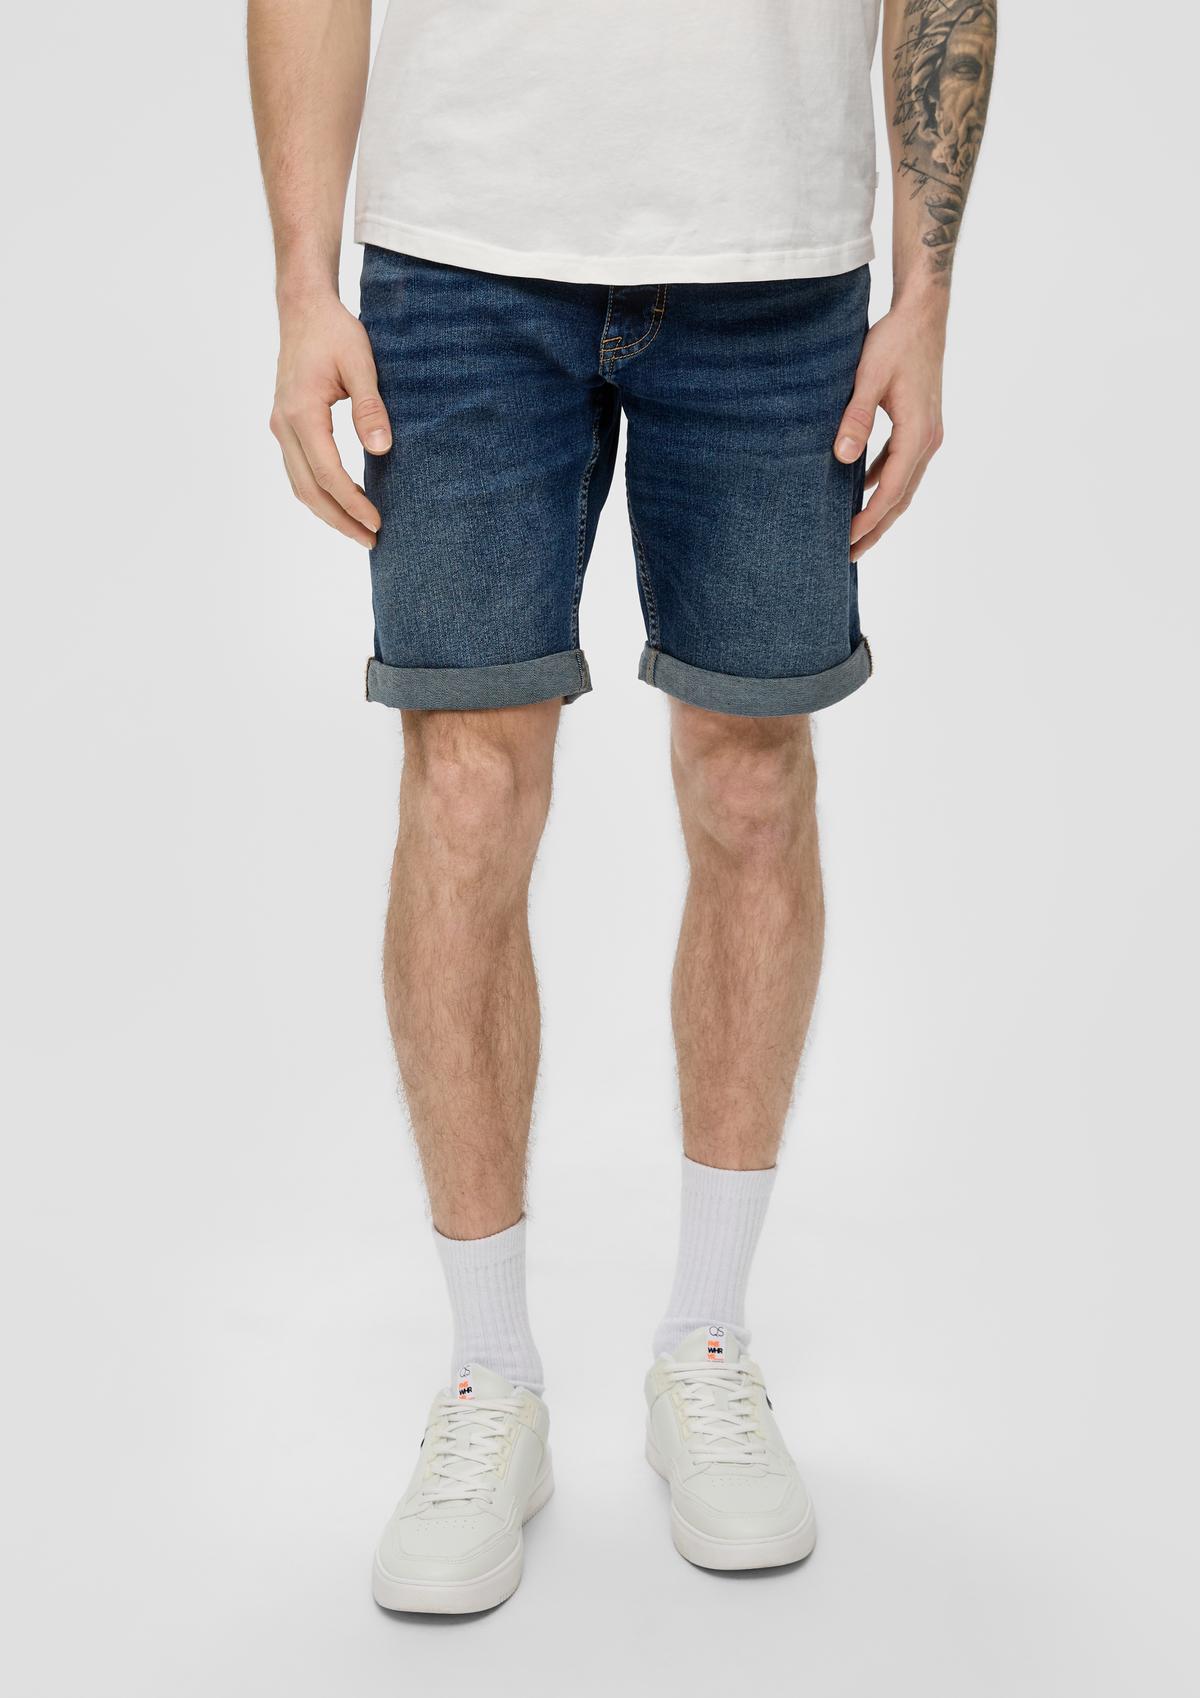 s.Oliver Bermuda Jeans John / Regular Fit / Mid Rise / Straight Leg